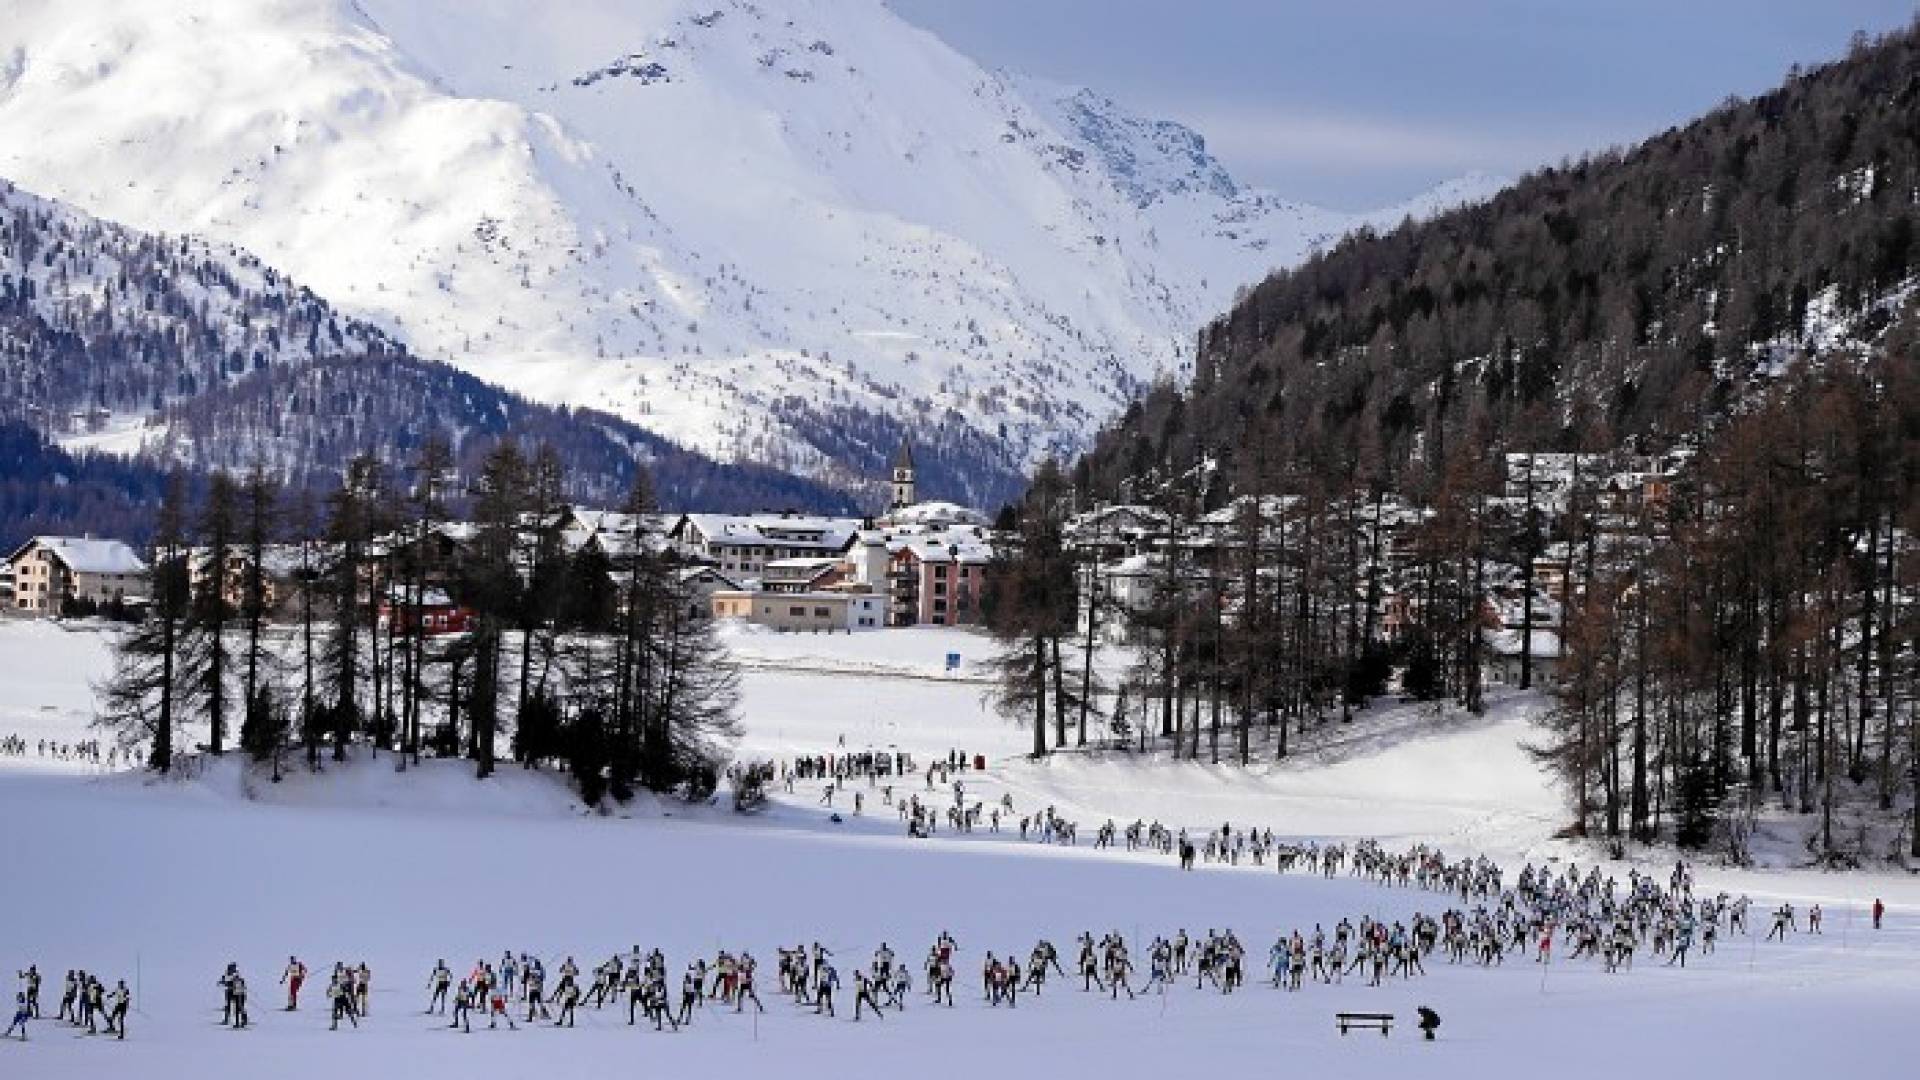 The Engadin Skimarathon